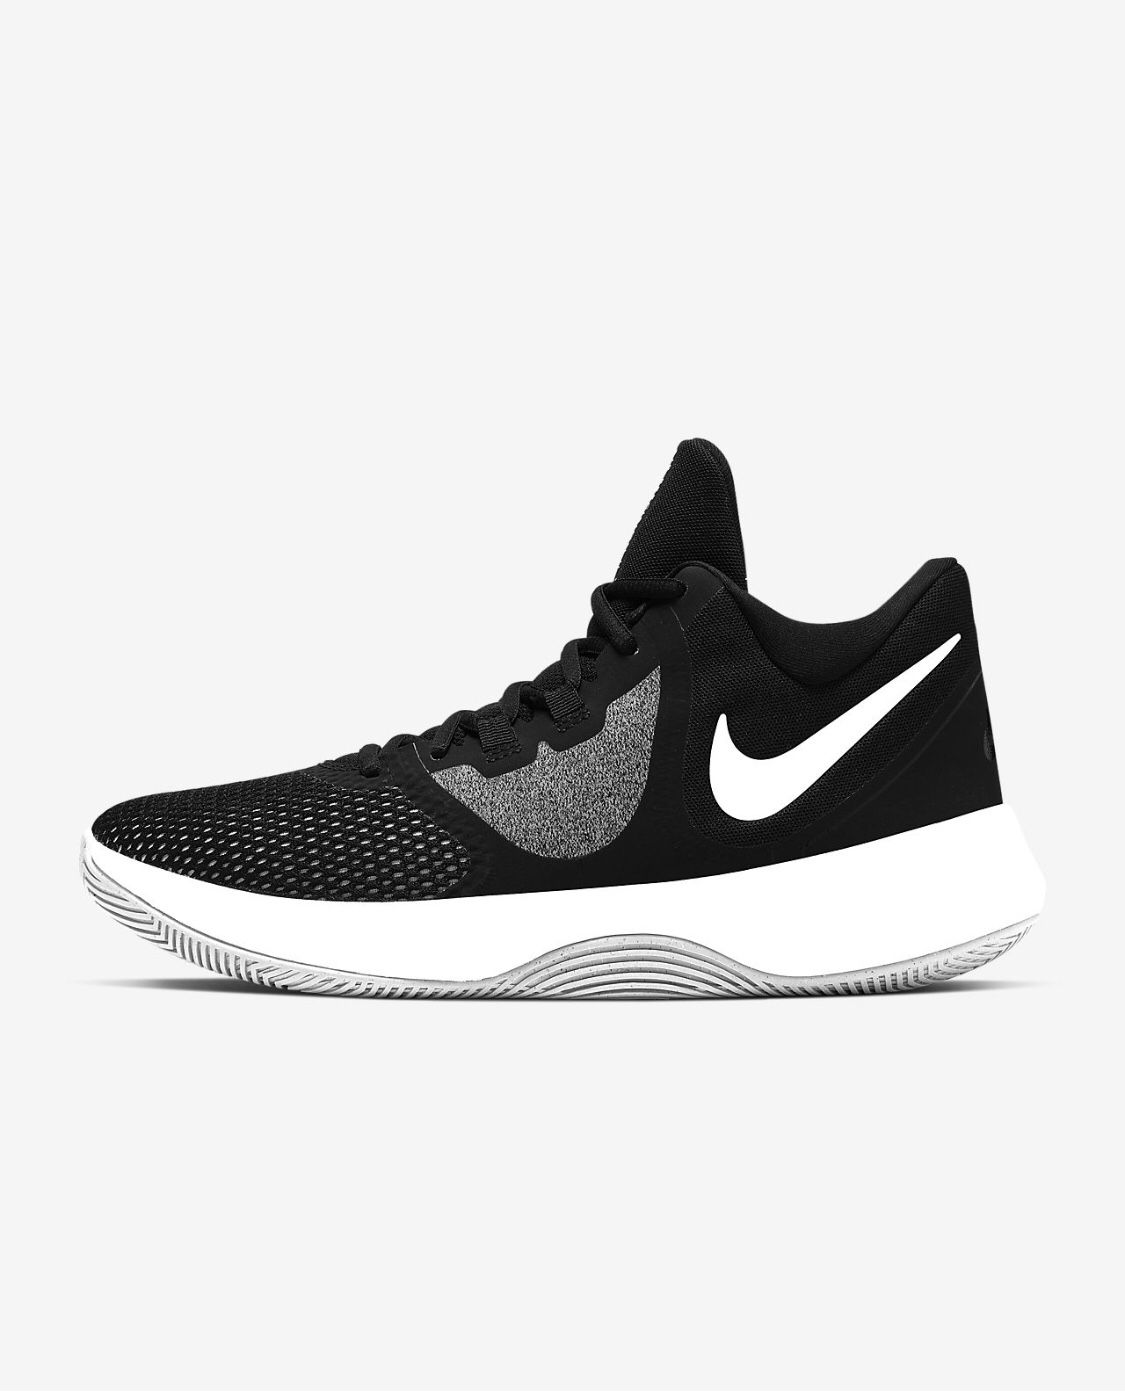 Nike Air Precision II Basketball Shoes Men size 9